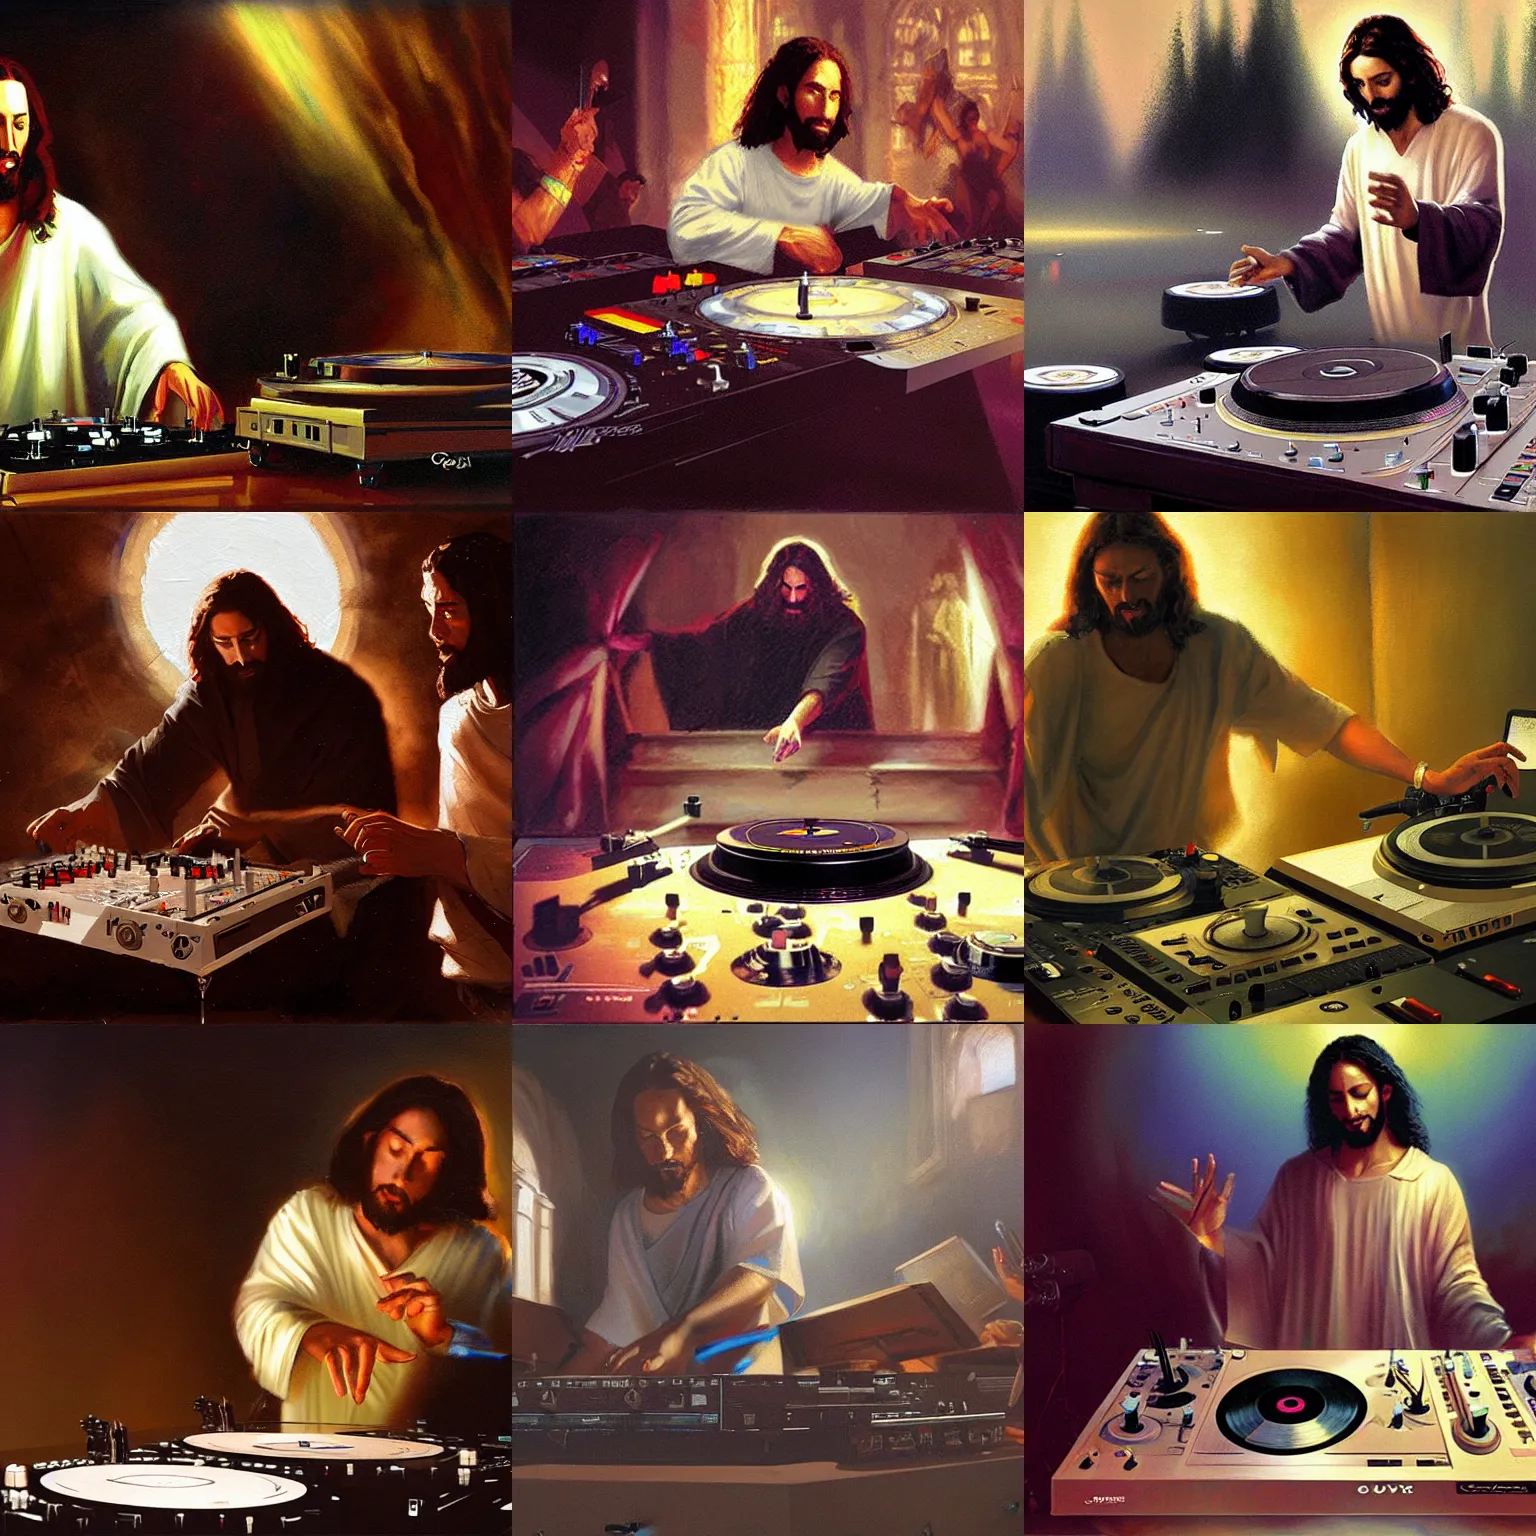 Prompt: a painting of jesus DJing with DJ turntables, craig mullins, greg rutkowski